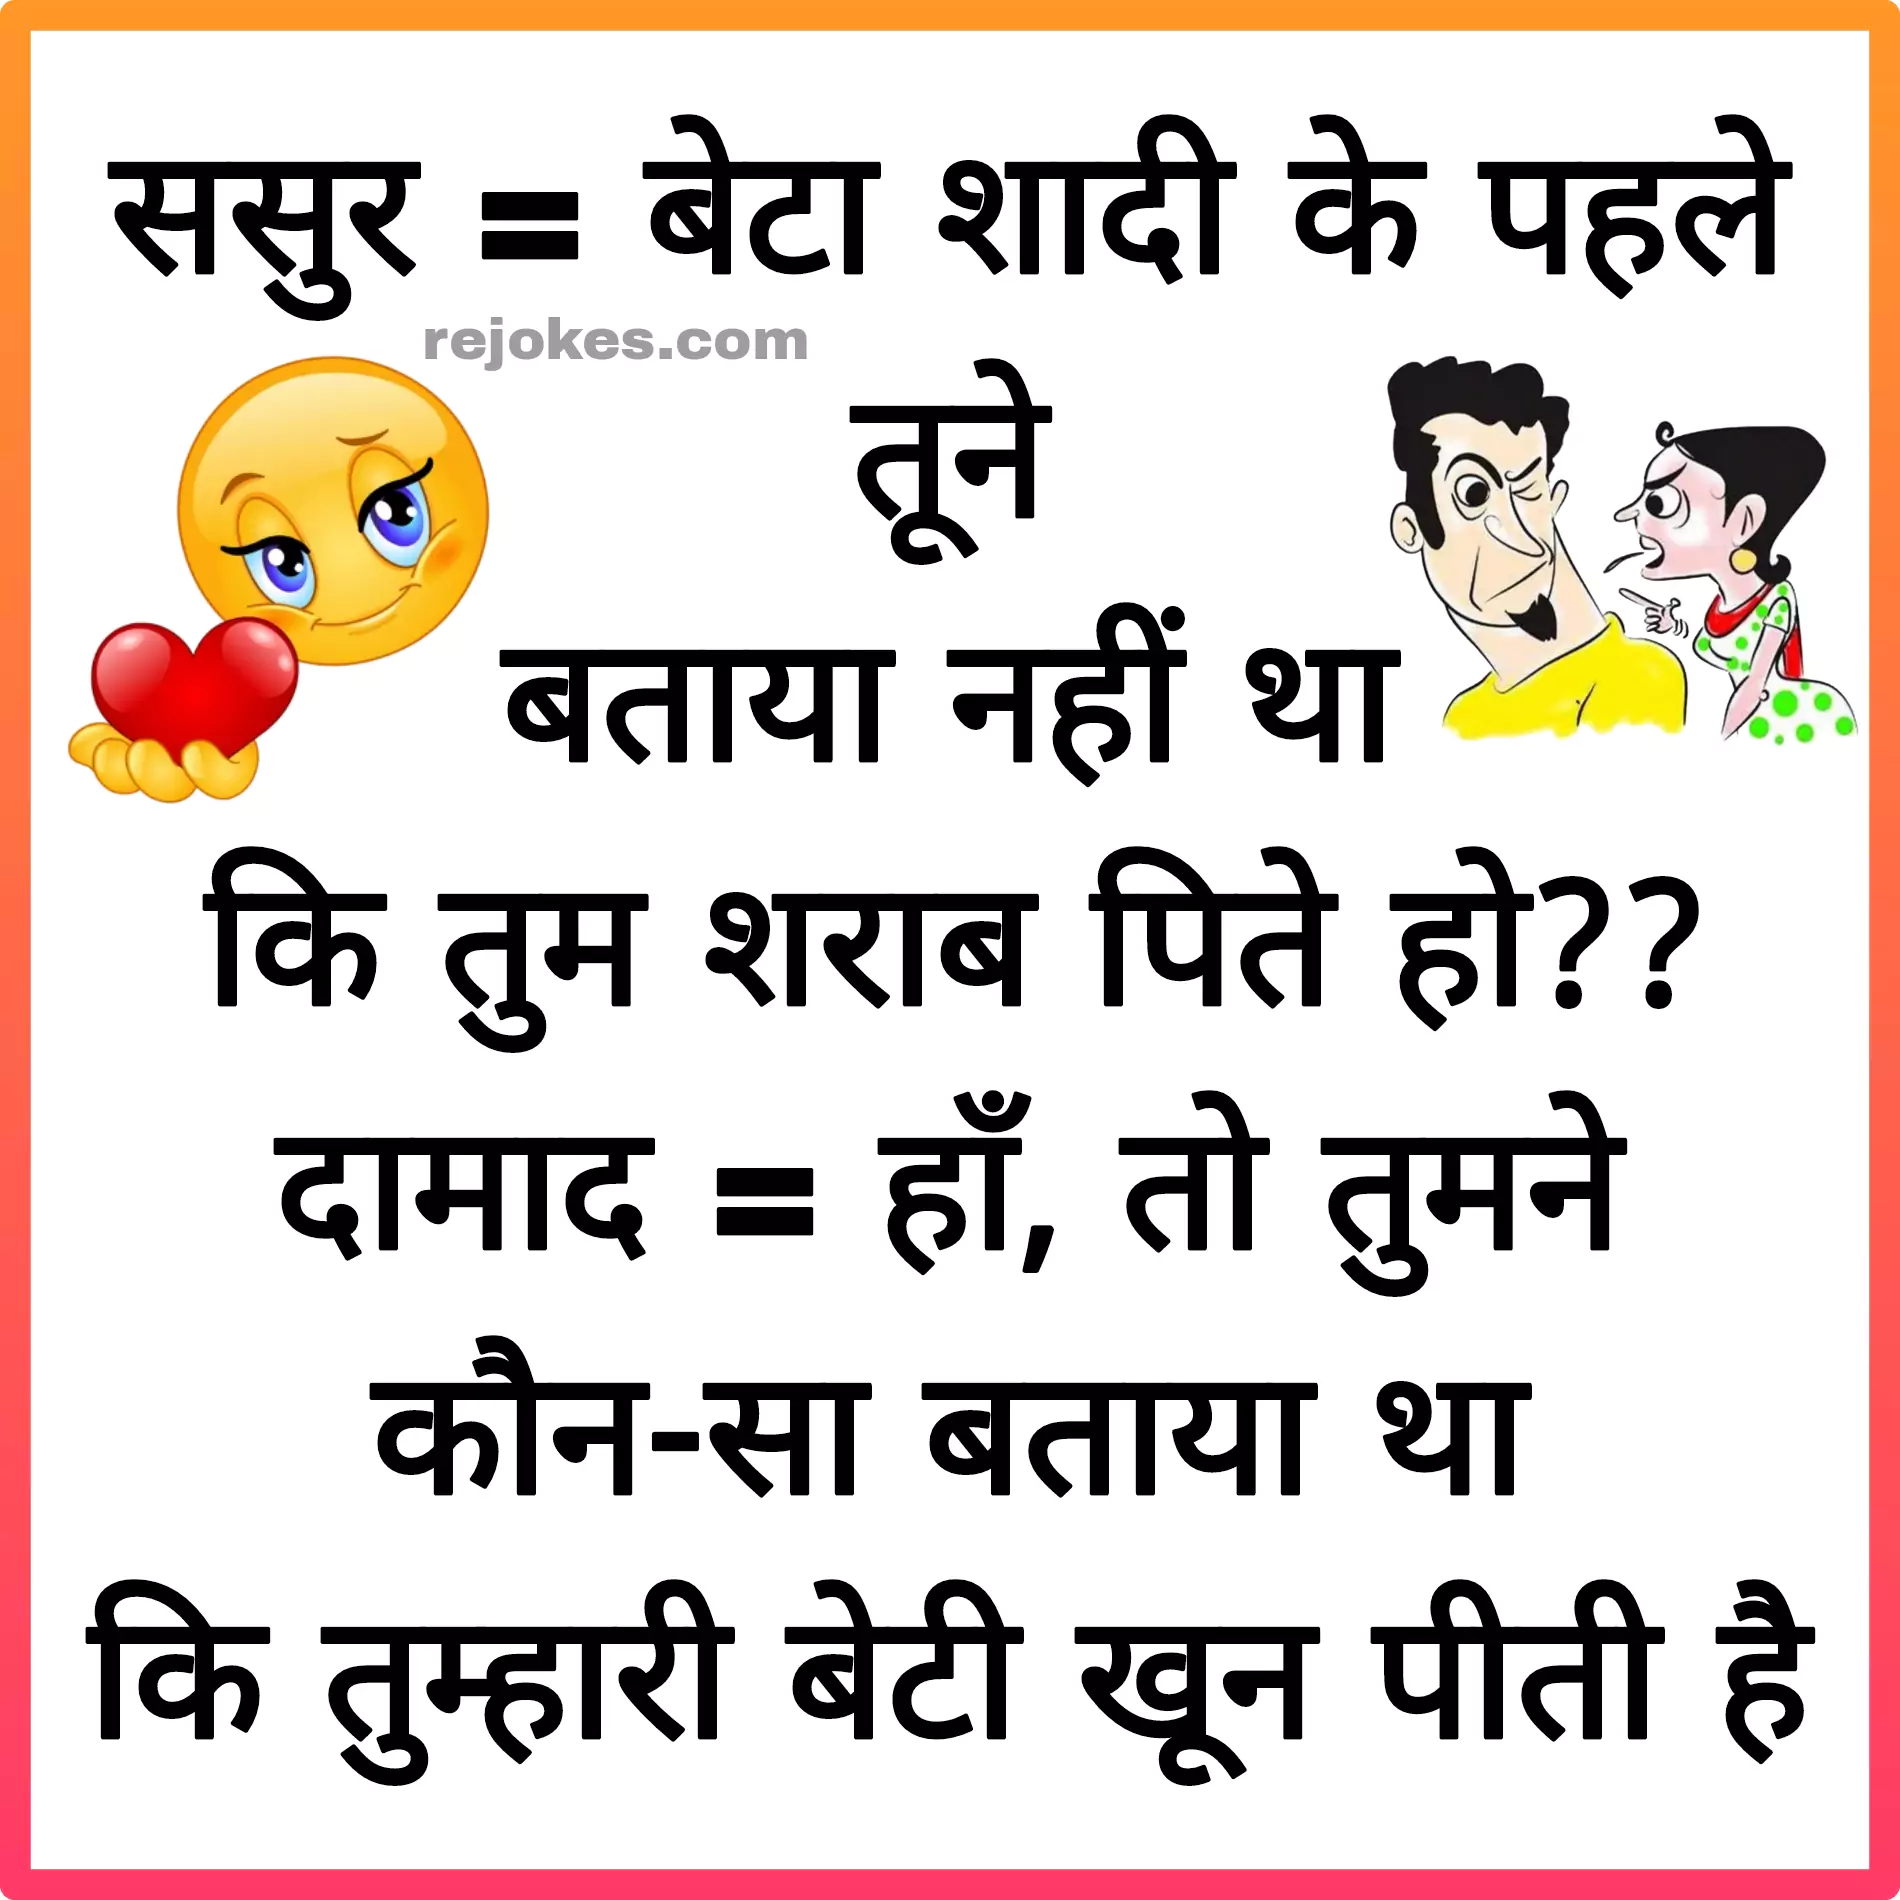 husband-wife jokes images in hindi